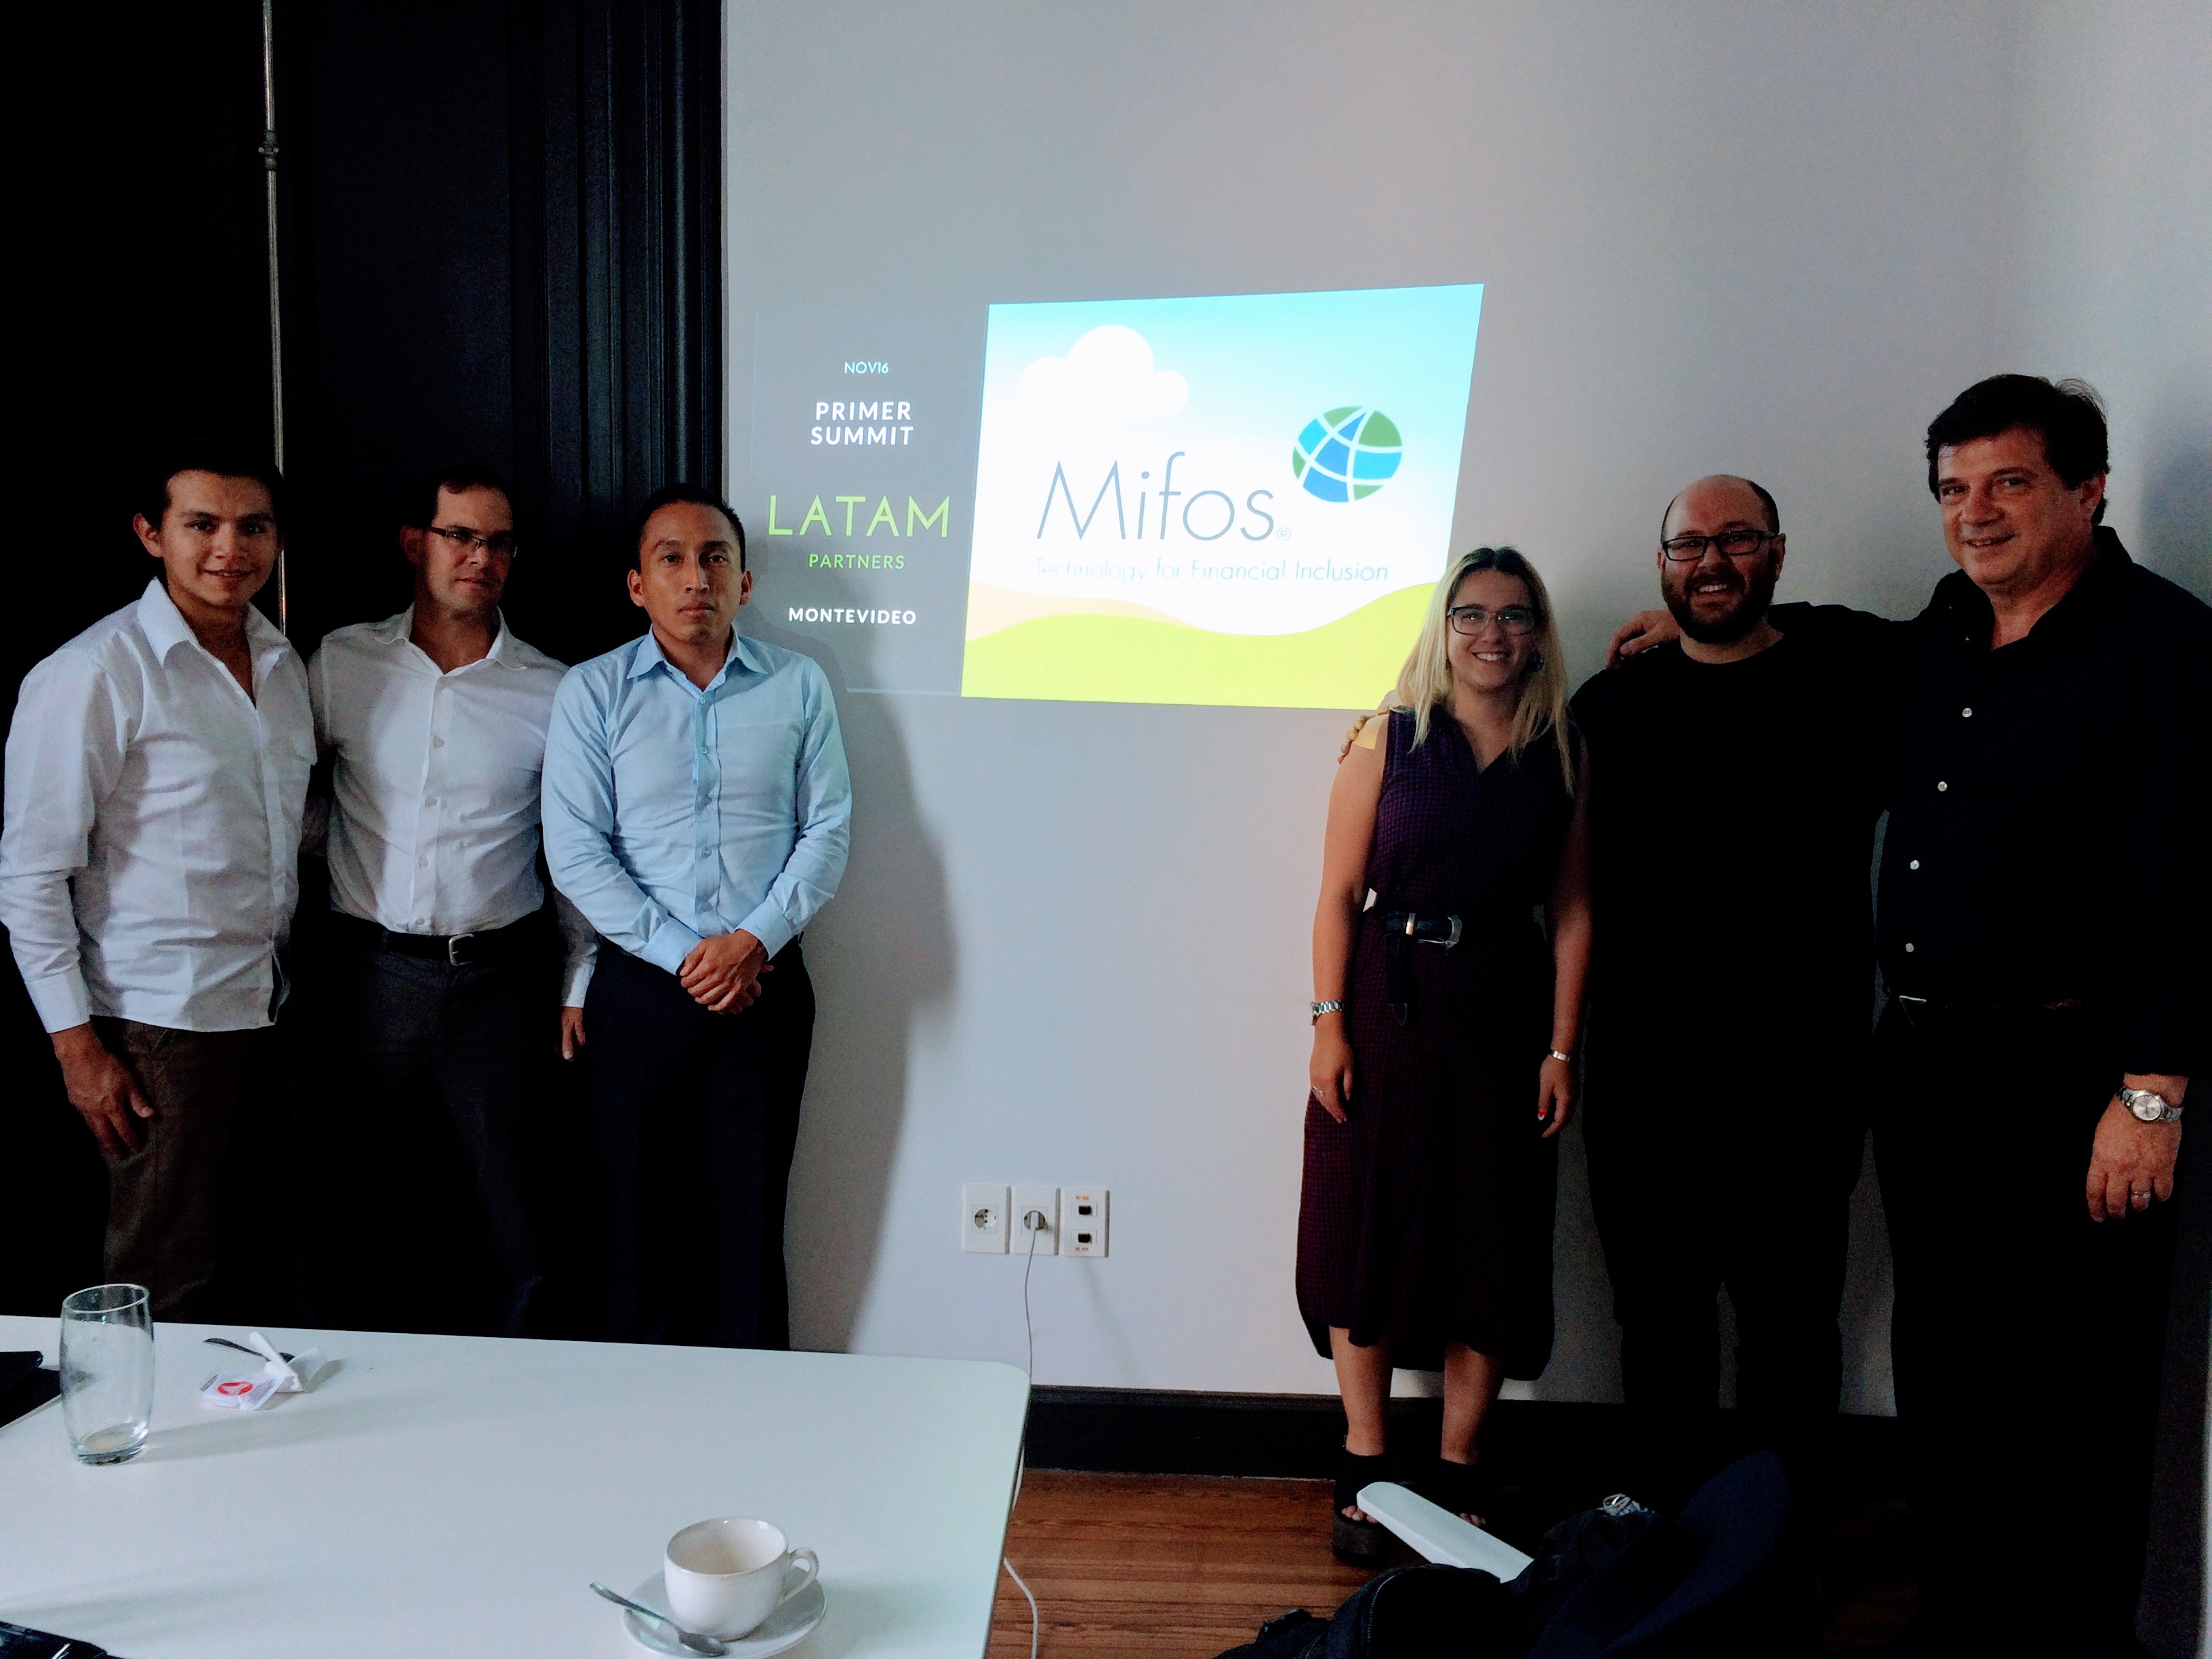 Mifos, Flexibility, iOU FinTech, and Jala Group - attendees of Mifos Latam Partner Summit